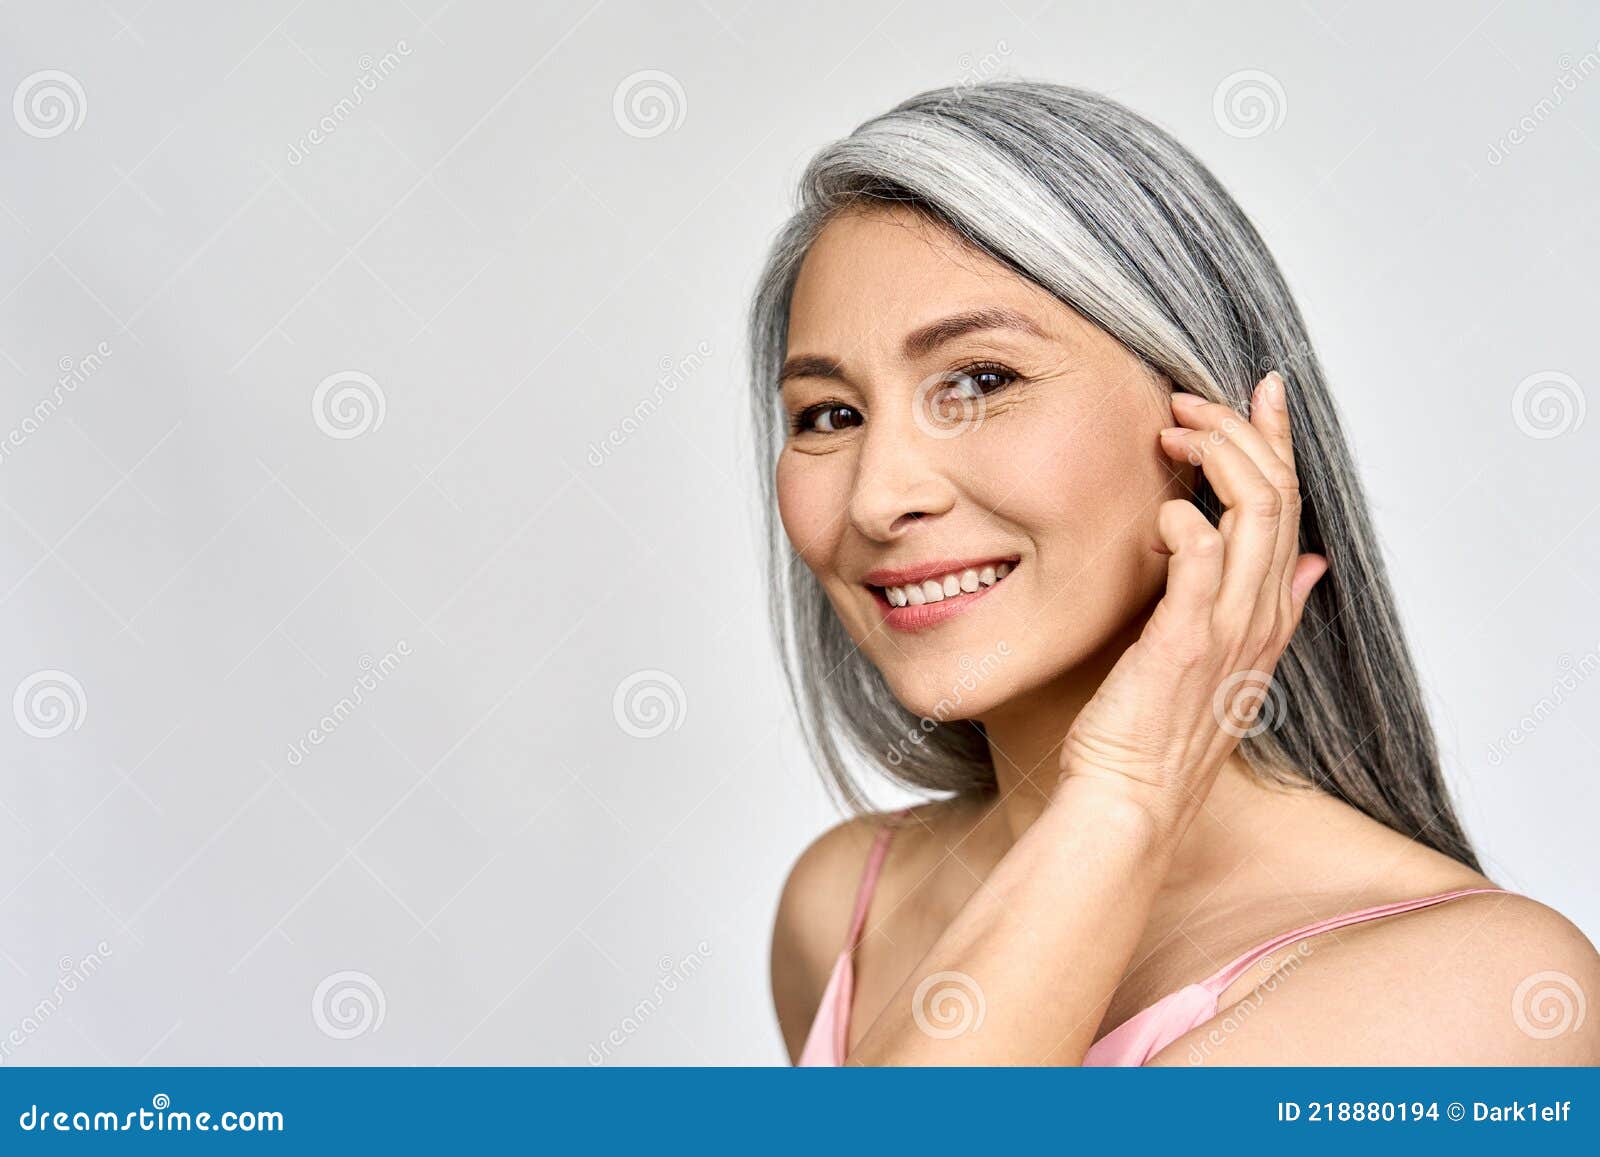 Senior Happy Middle Aged Mature Asian Woman Headshot Portrait Skin